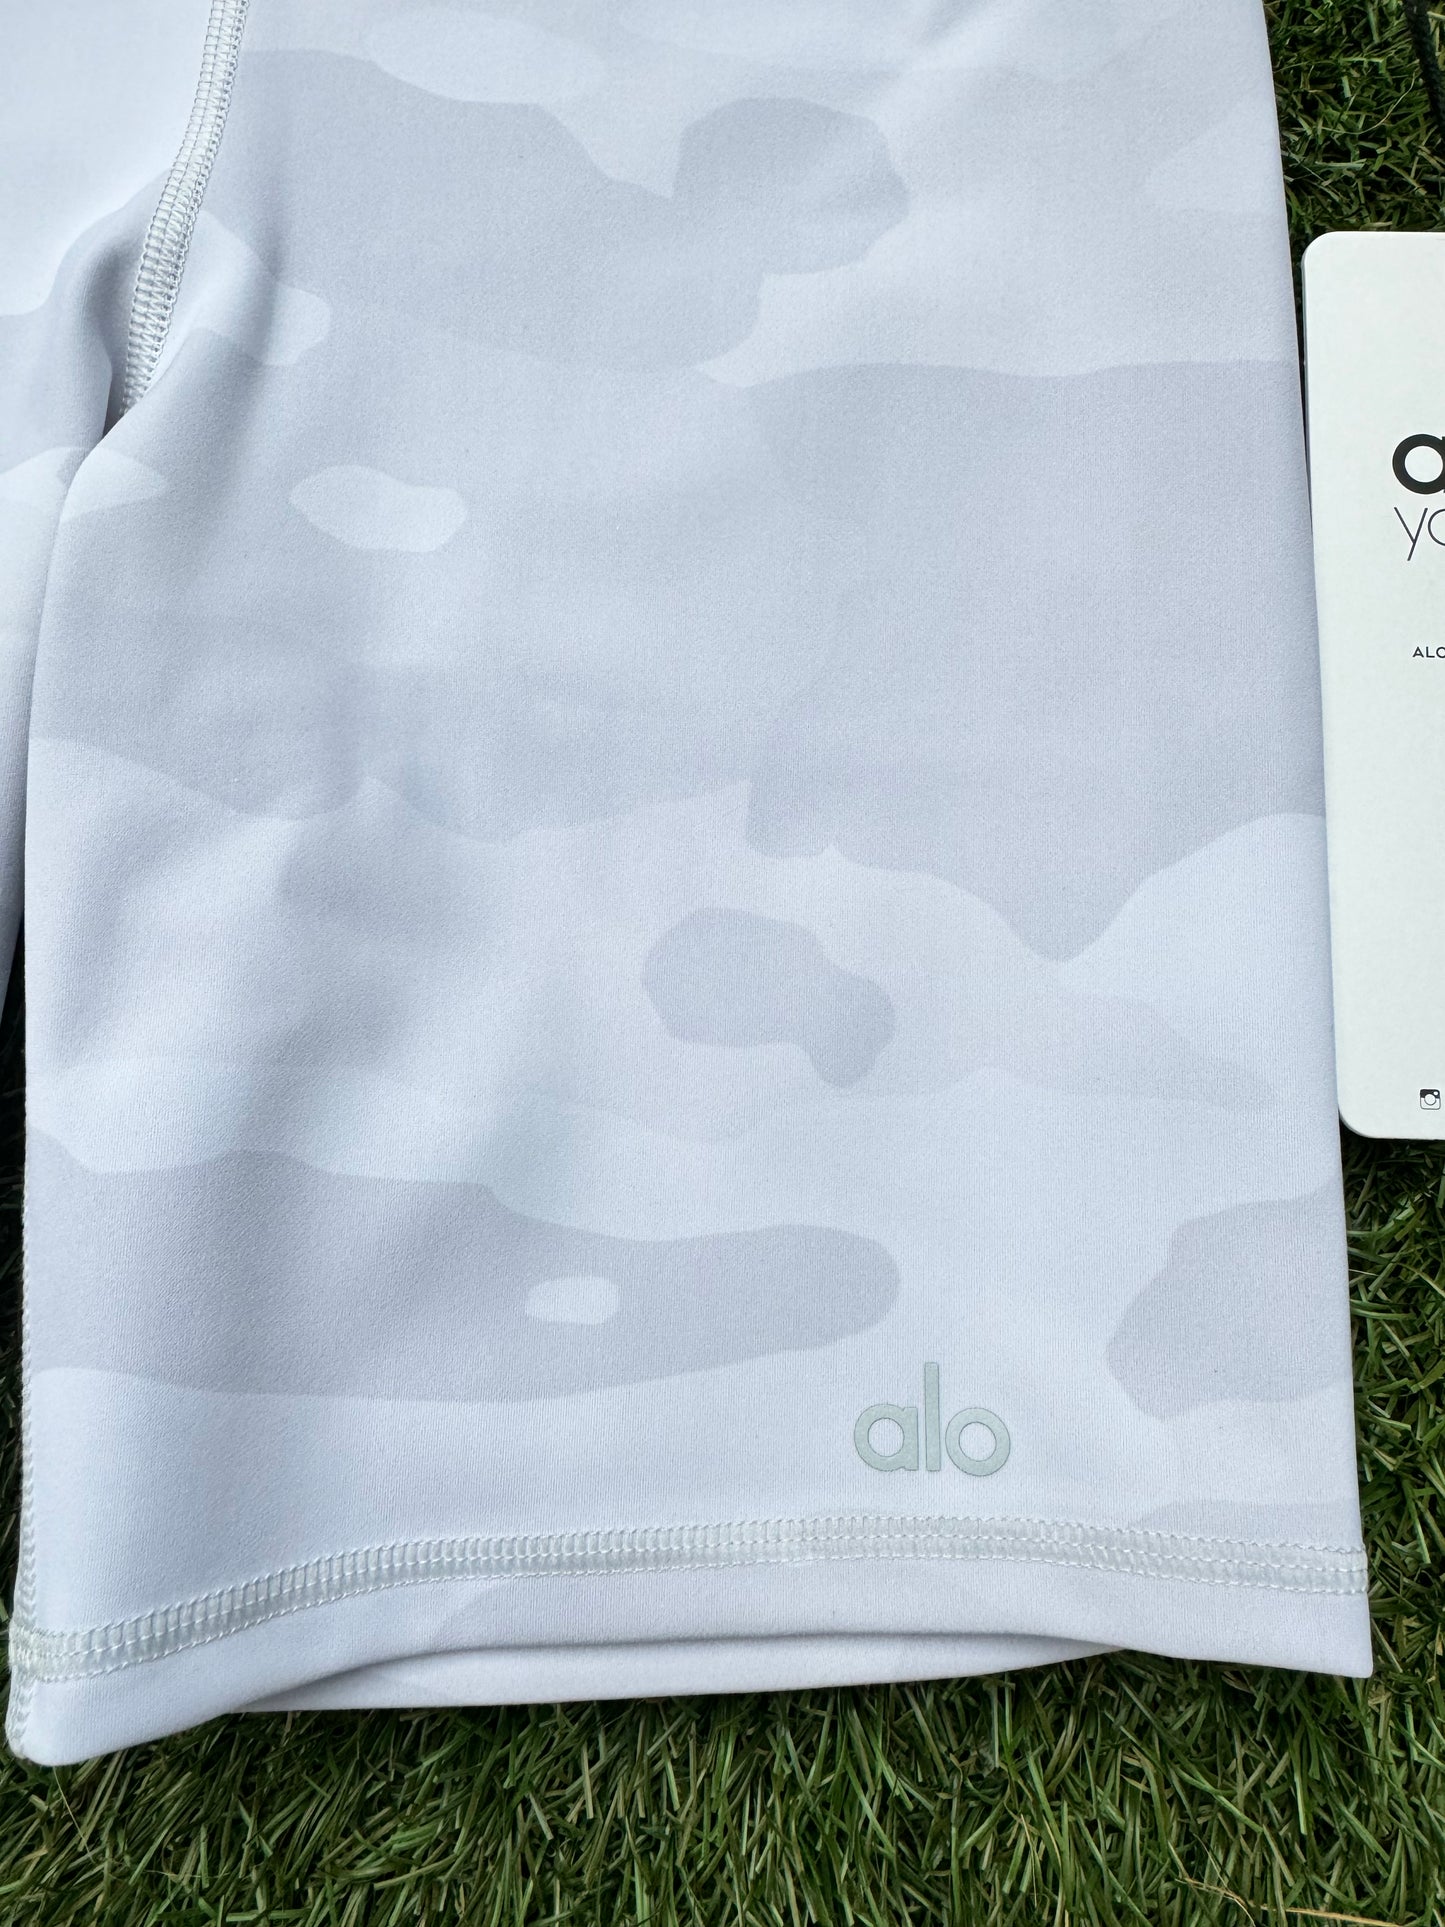 Alo Yoga 7" High-Waist Vapor Short White Camo Camouflage Stretch Bike Shorts